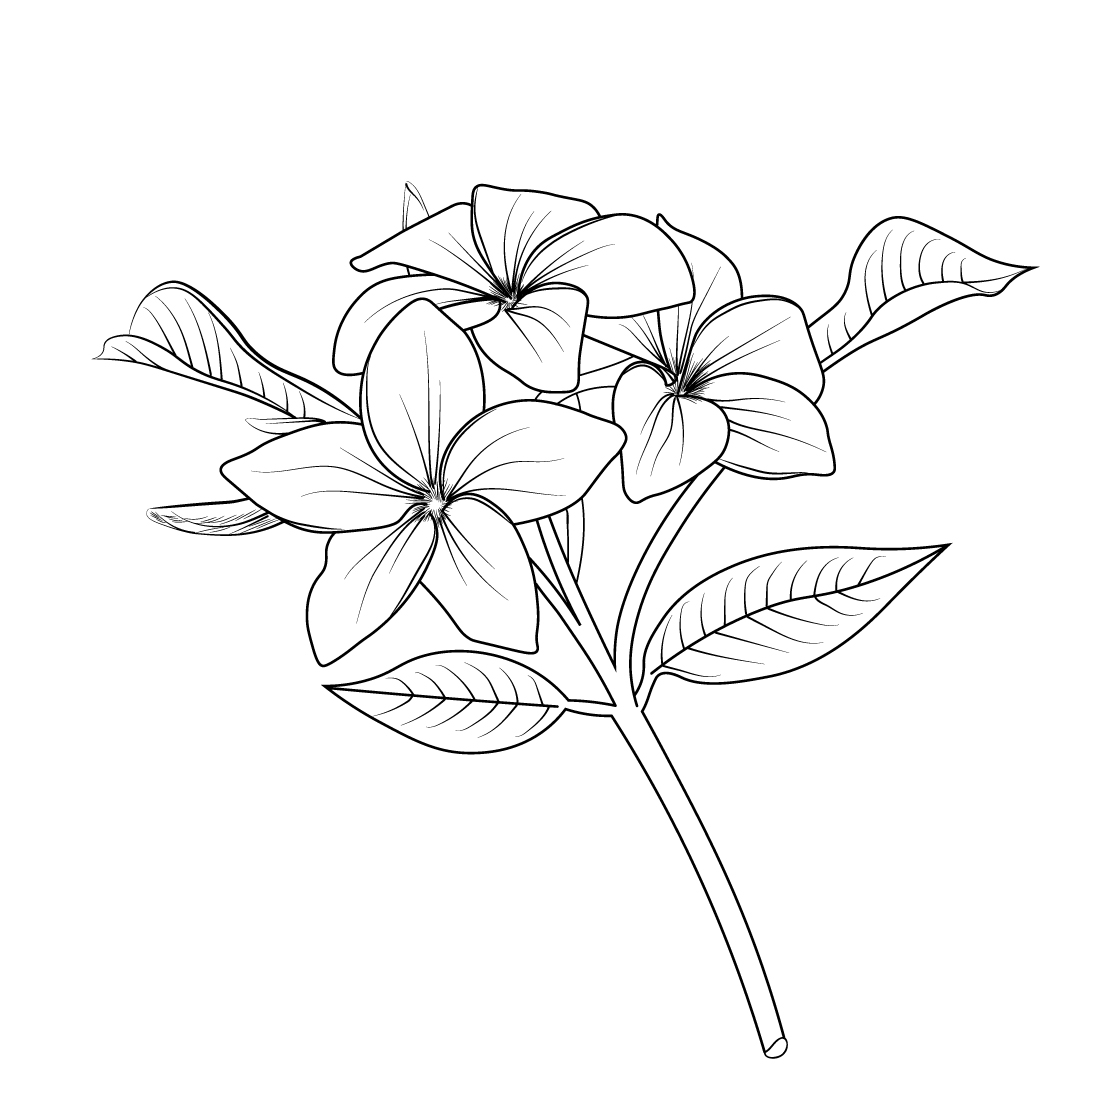 Plumeria flower drawing illustration. のイラスト素材 [39175446] - PIXTA